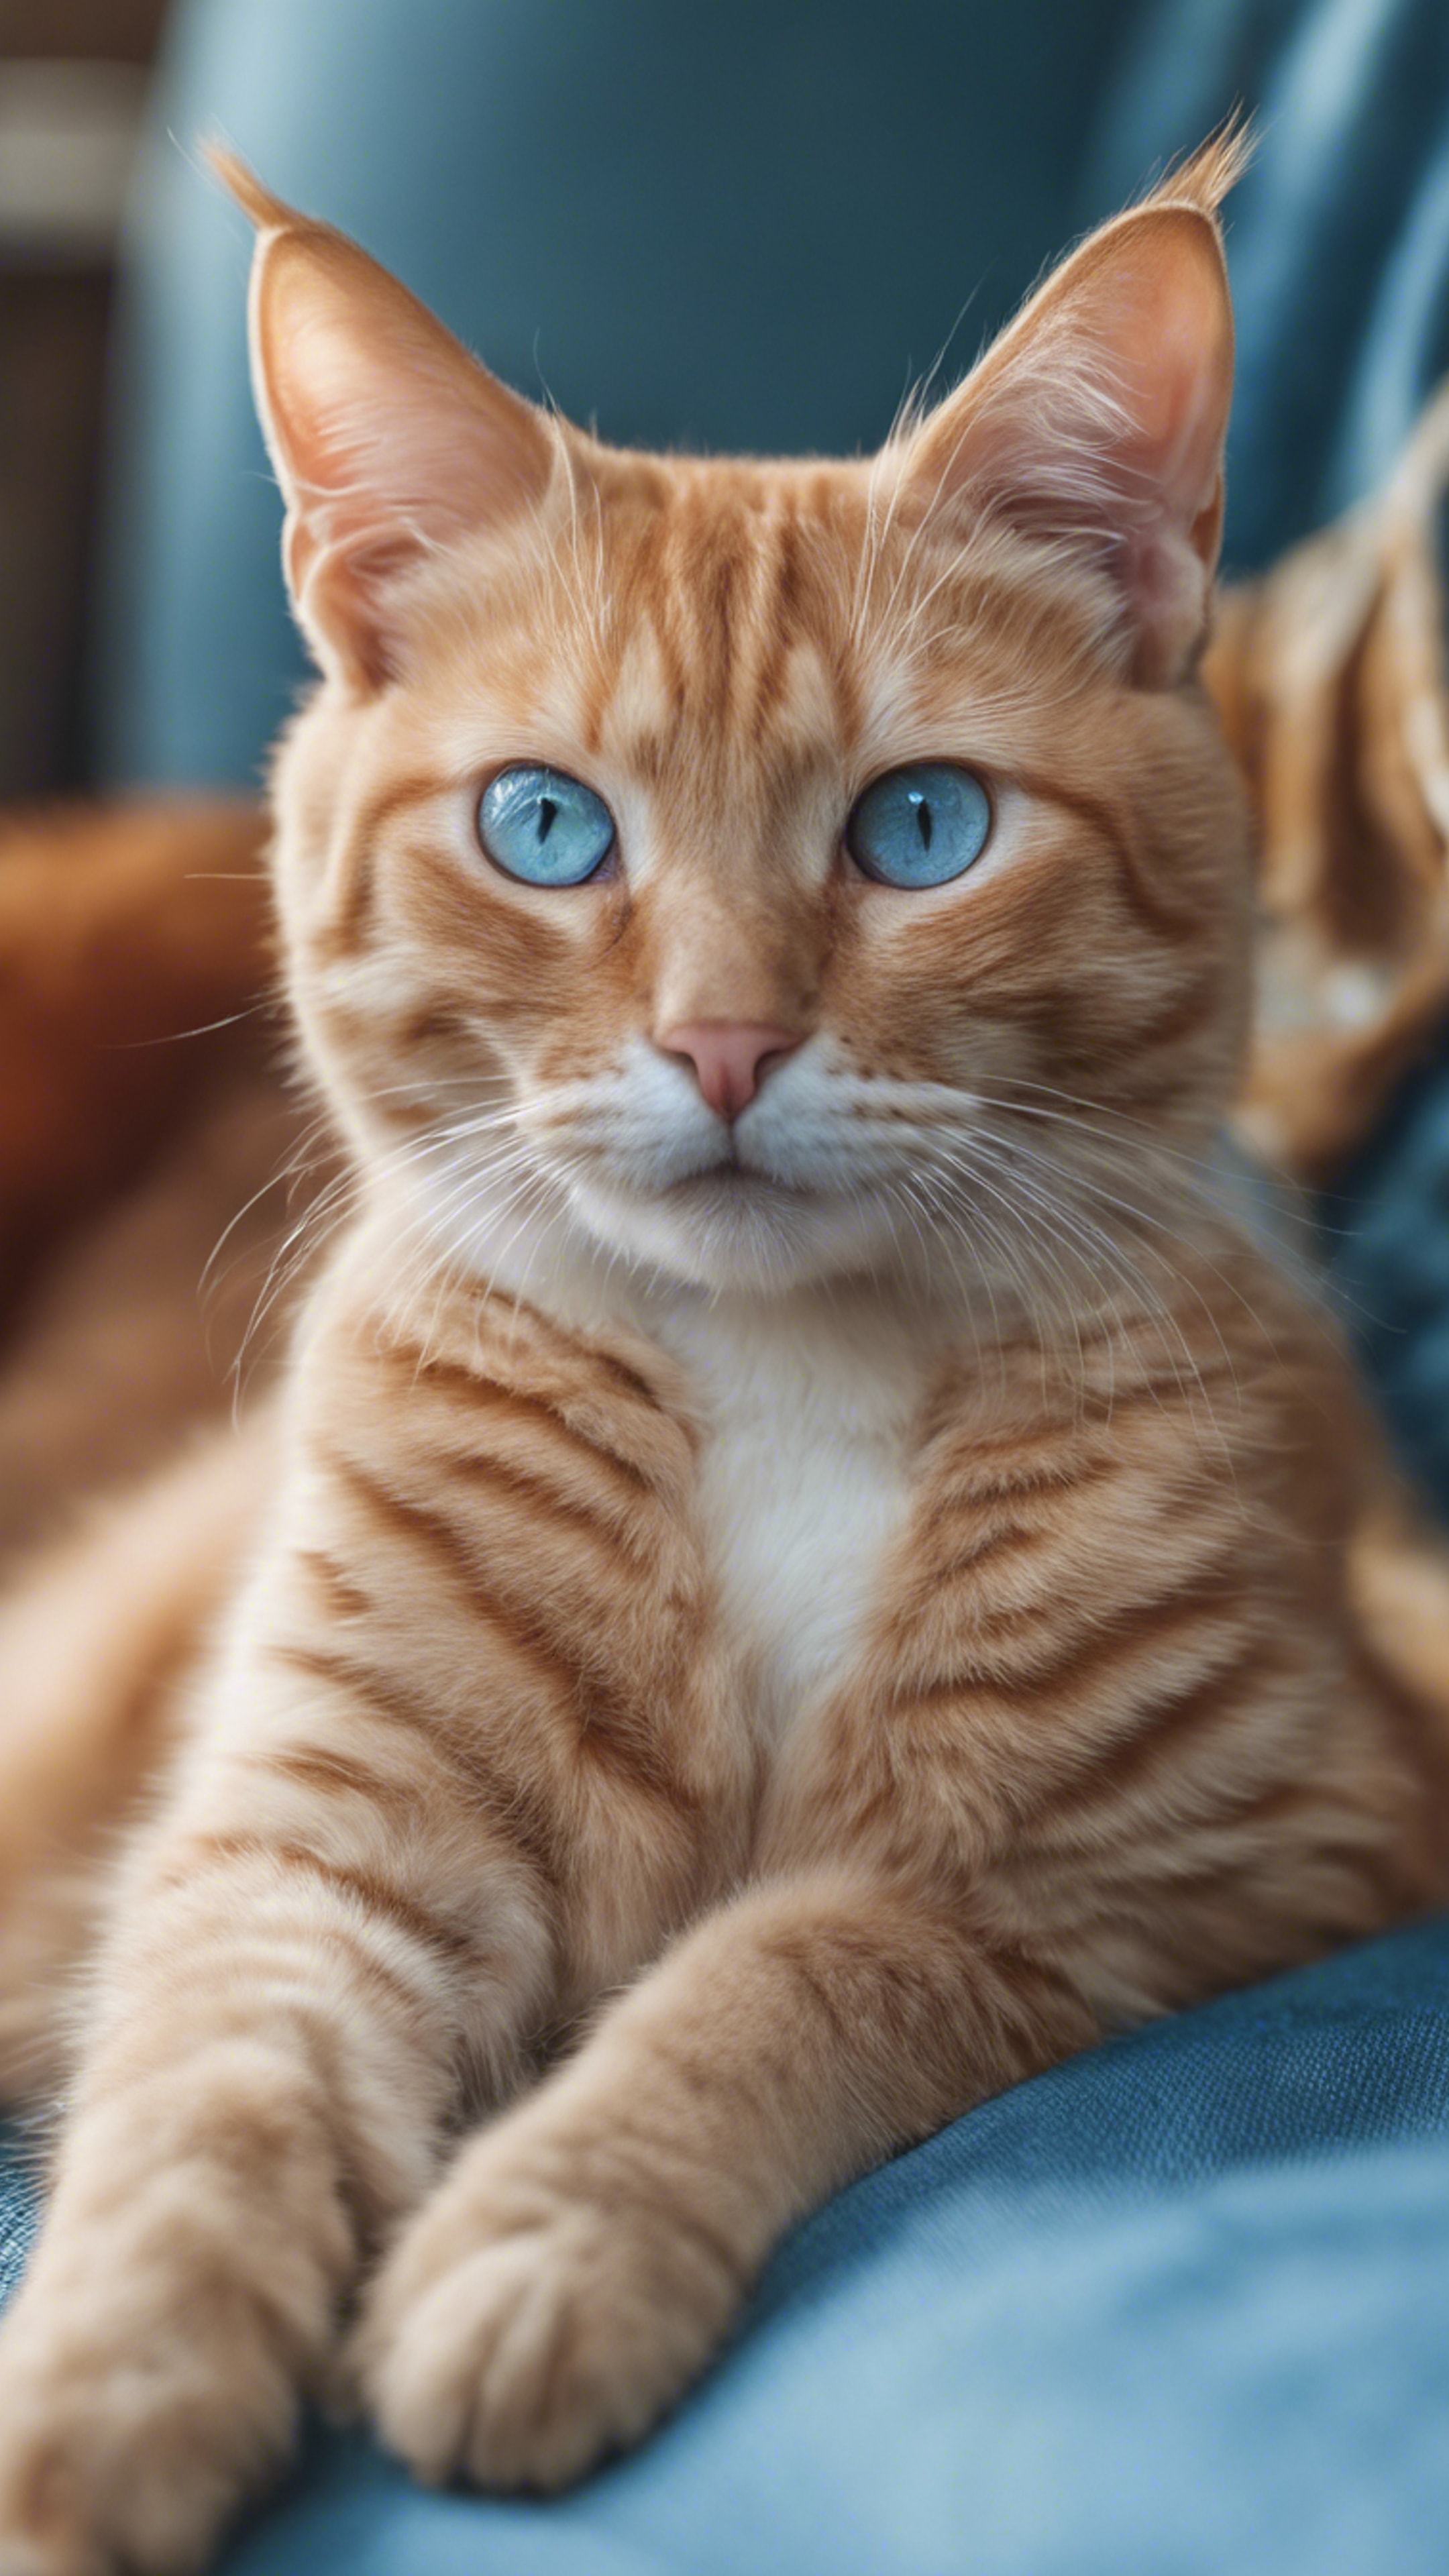 An orange tabby cat with blue eyes sitting on a blue cushion.壁紙[b936c4ba4e6b4258acad]